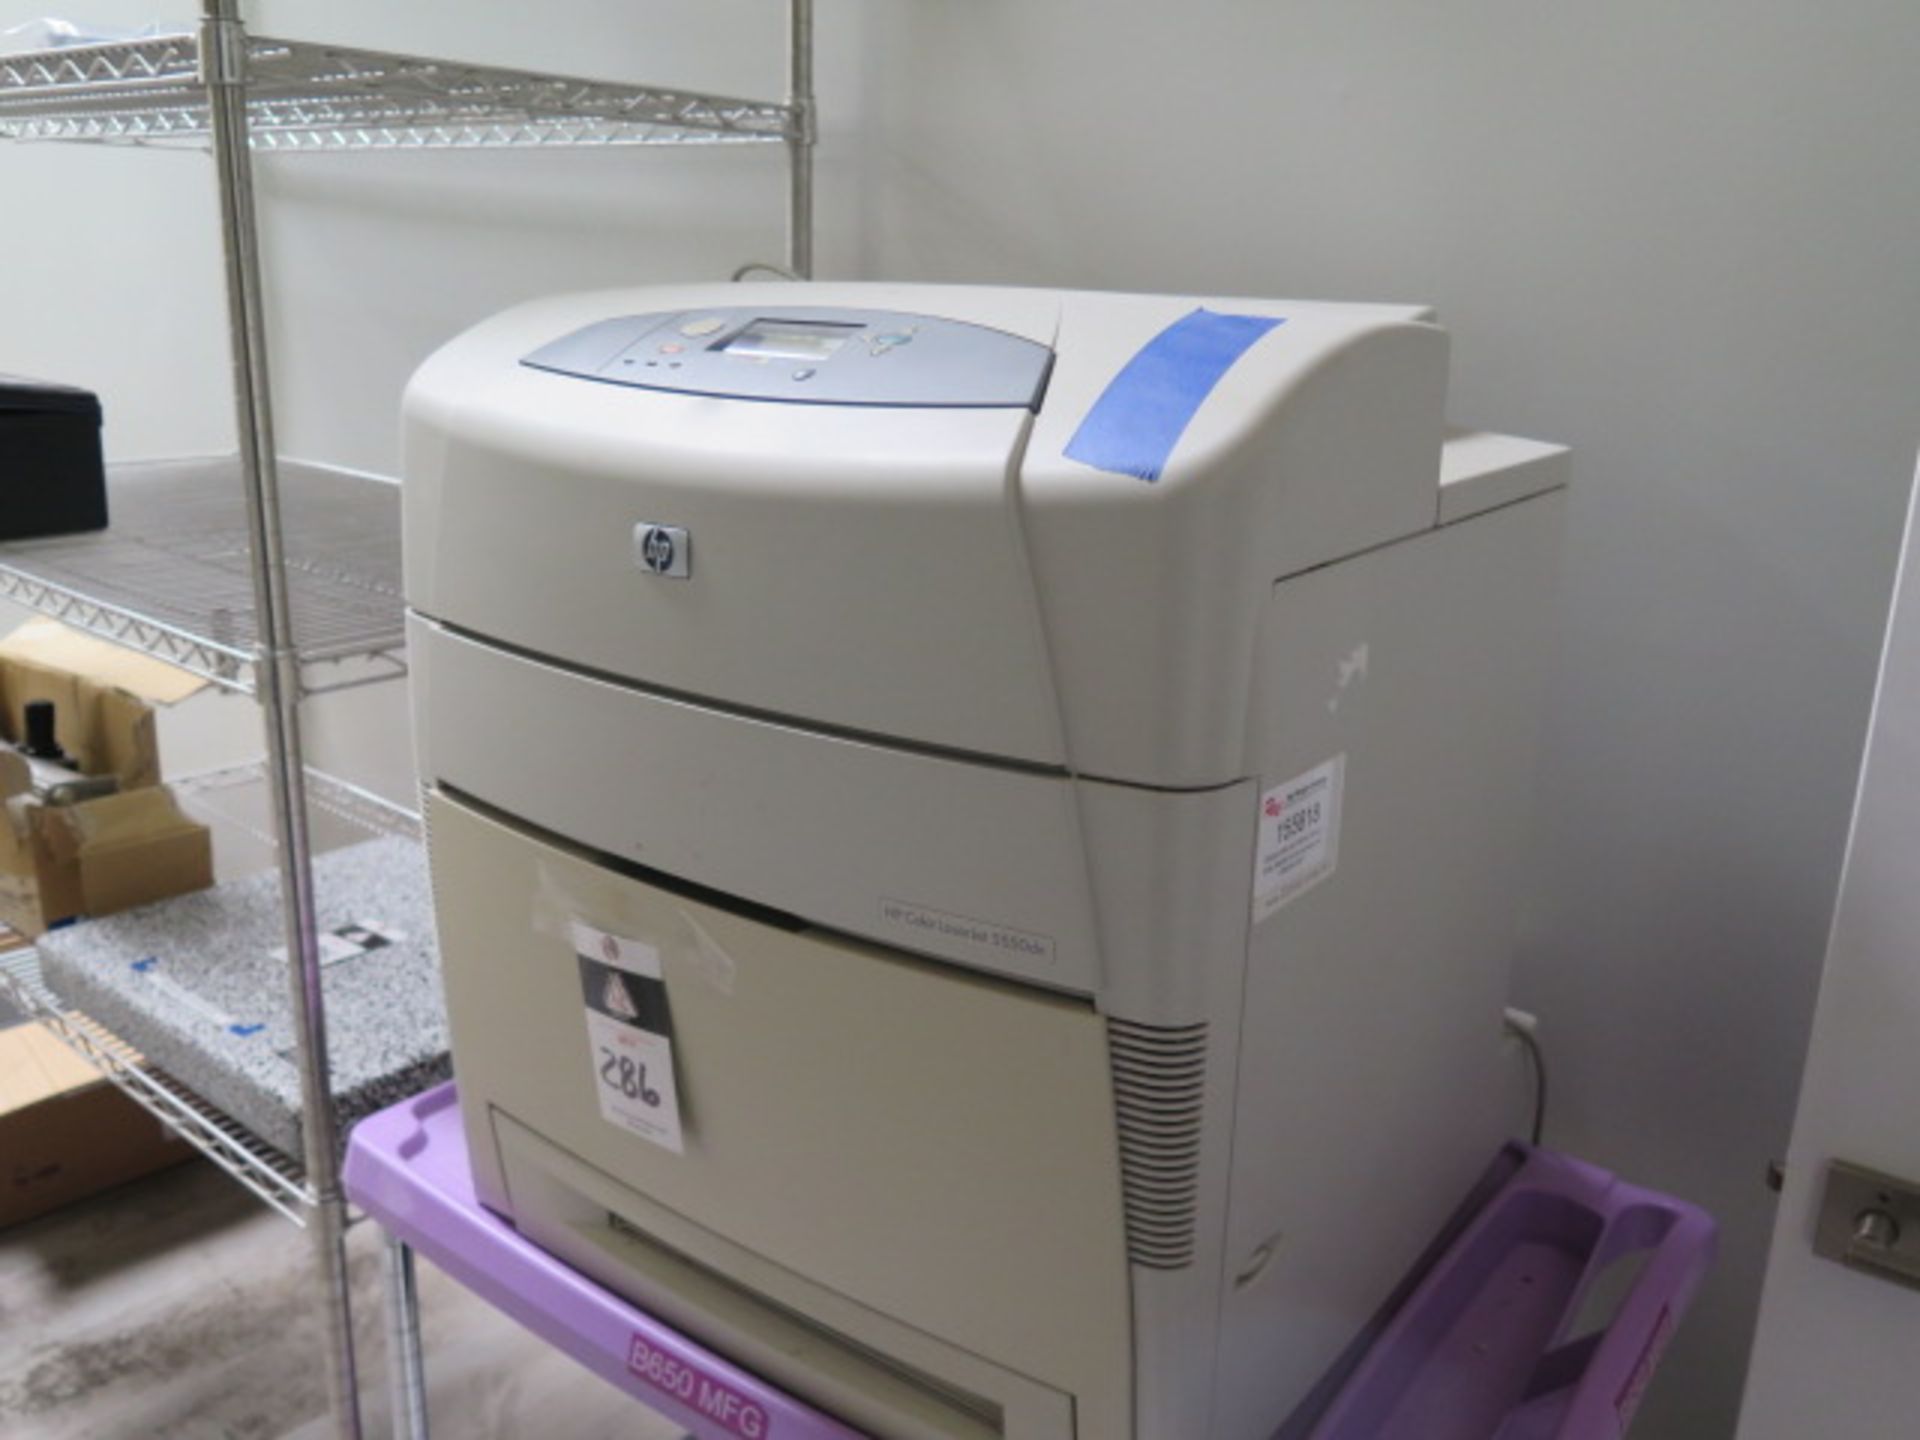 Hewlett Packard Color LaserJet 5550dn Color Printer (SOLD AS-IS - NO WARRANTY) - Image 2 of 6